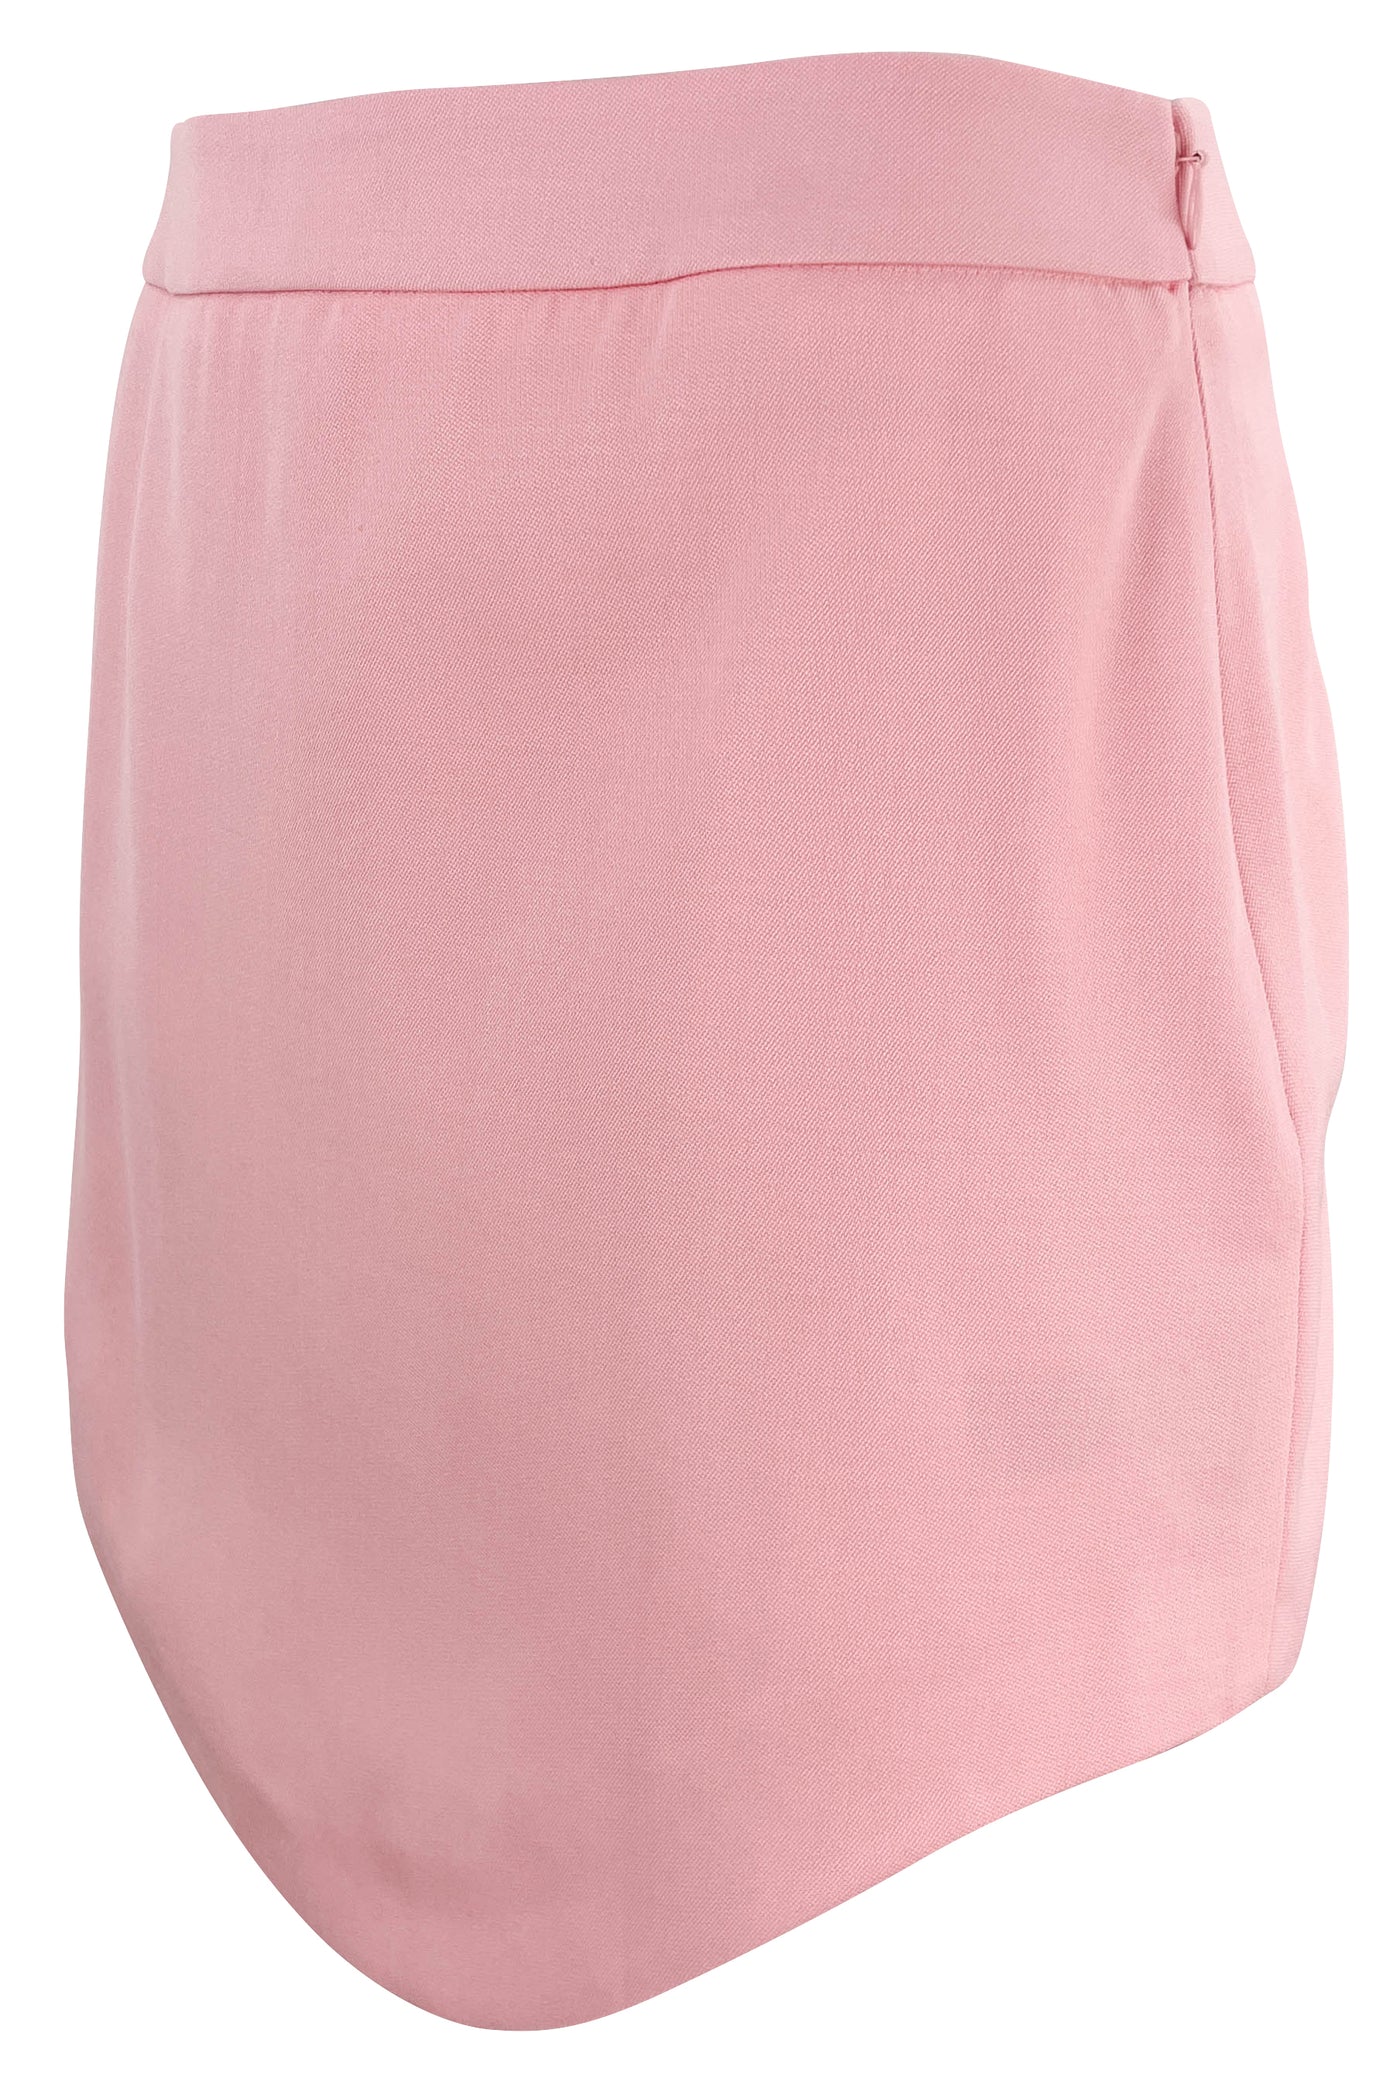 Casablanca Wool Mini Skirt in Pink - Discounts on Casablanca at UAL